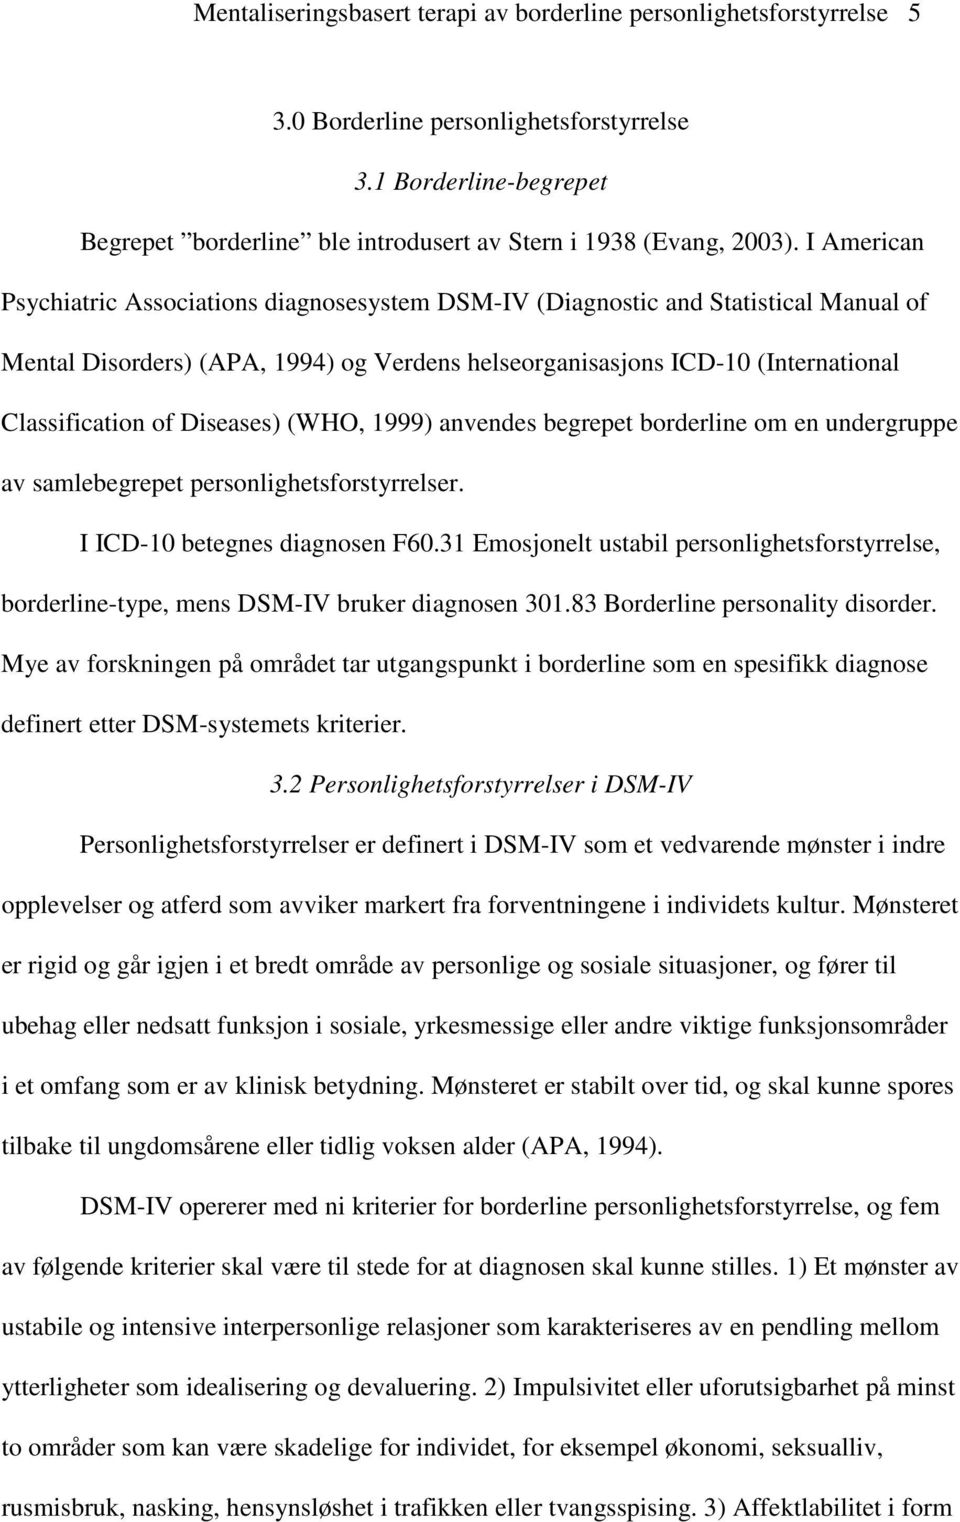 I American Psychiatric Associations diagnosesystem DSM-IV (Diagnostic and Statistical Manual of Mental Disorders) (APA, 1994) og Verdens helseorganisasjons ICD-10 (International Classification of